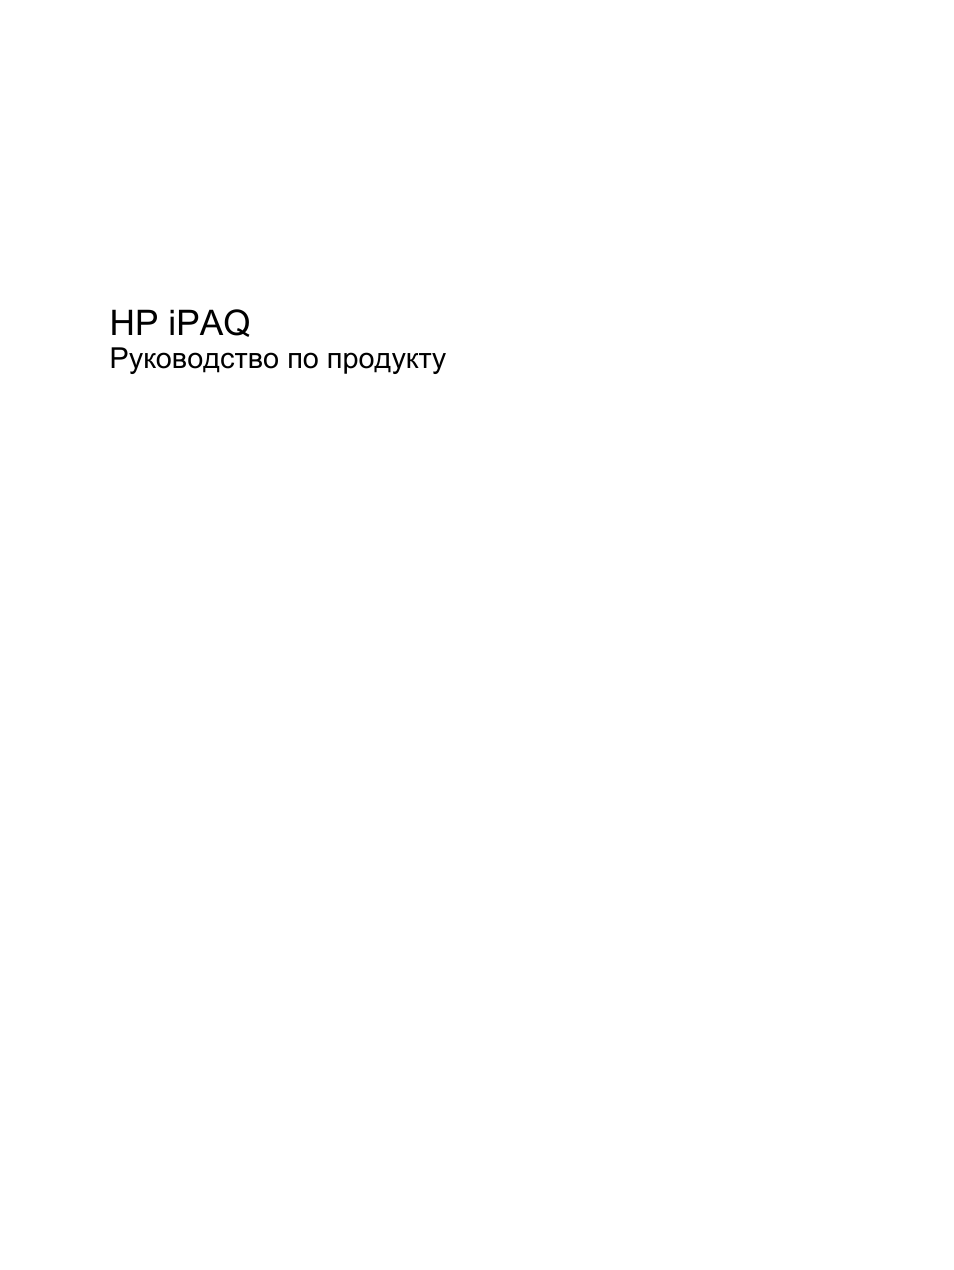 Инструкция по эксплуатации HP iPAQ 314 Travel Companion | 91 cтраница